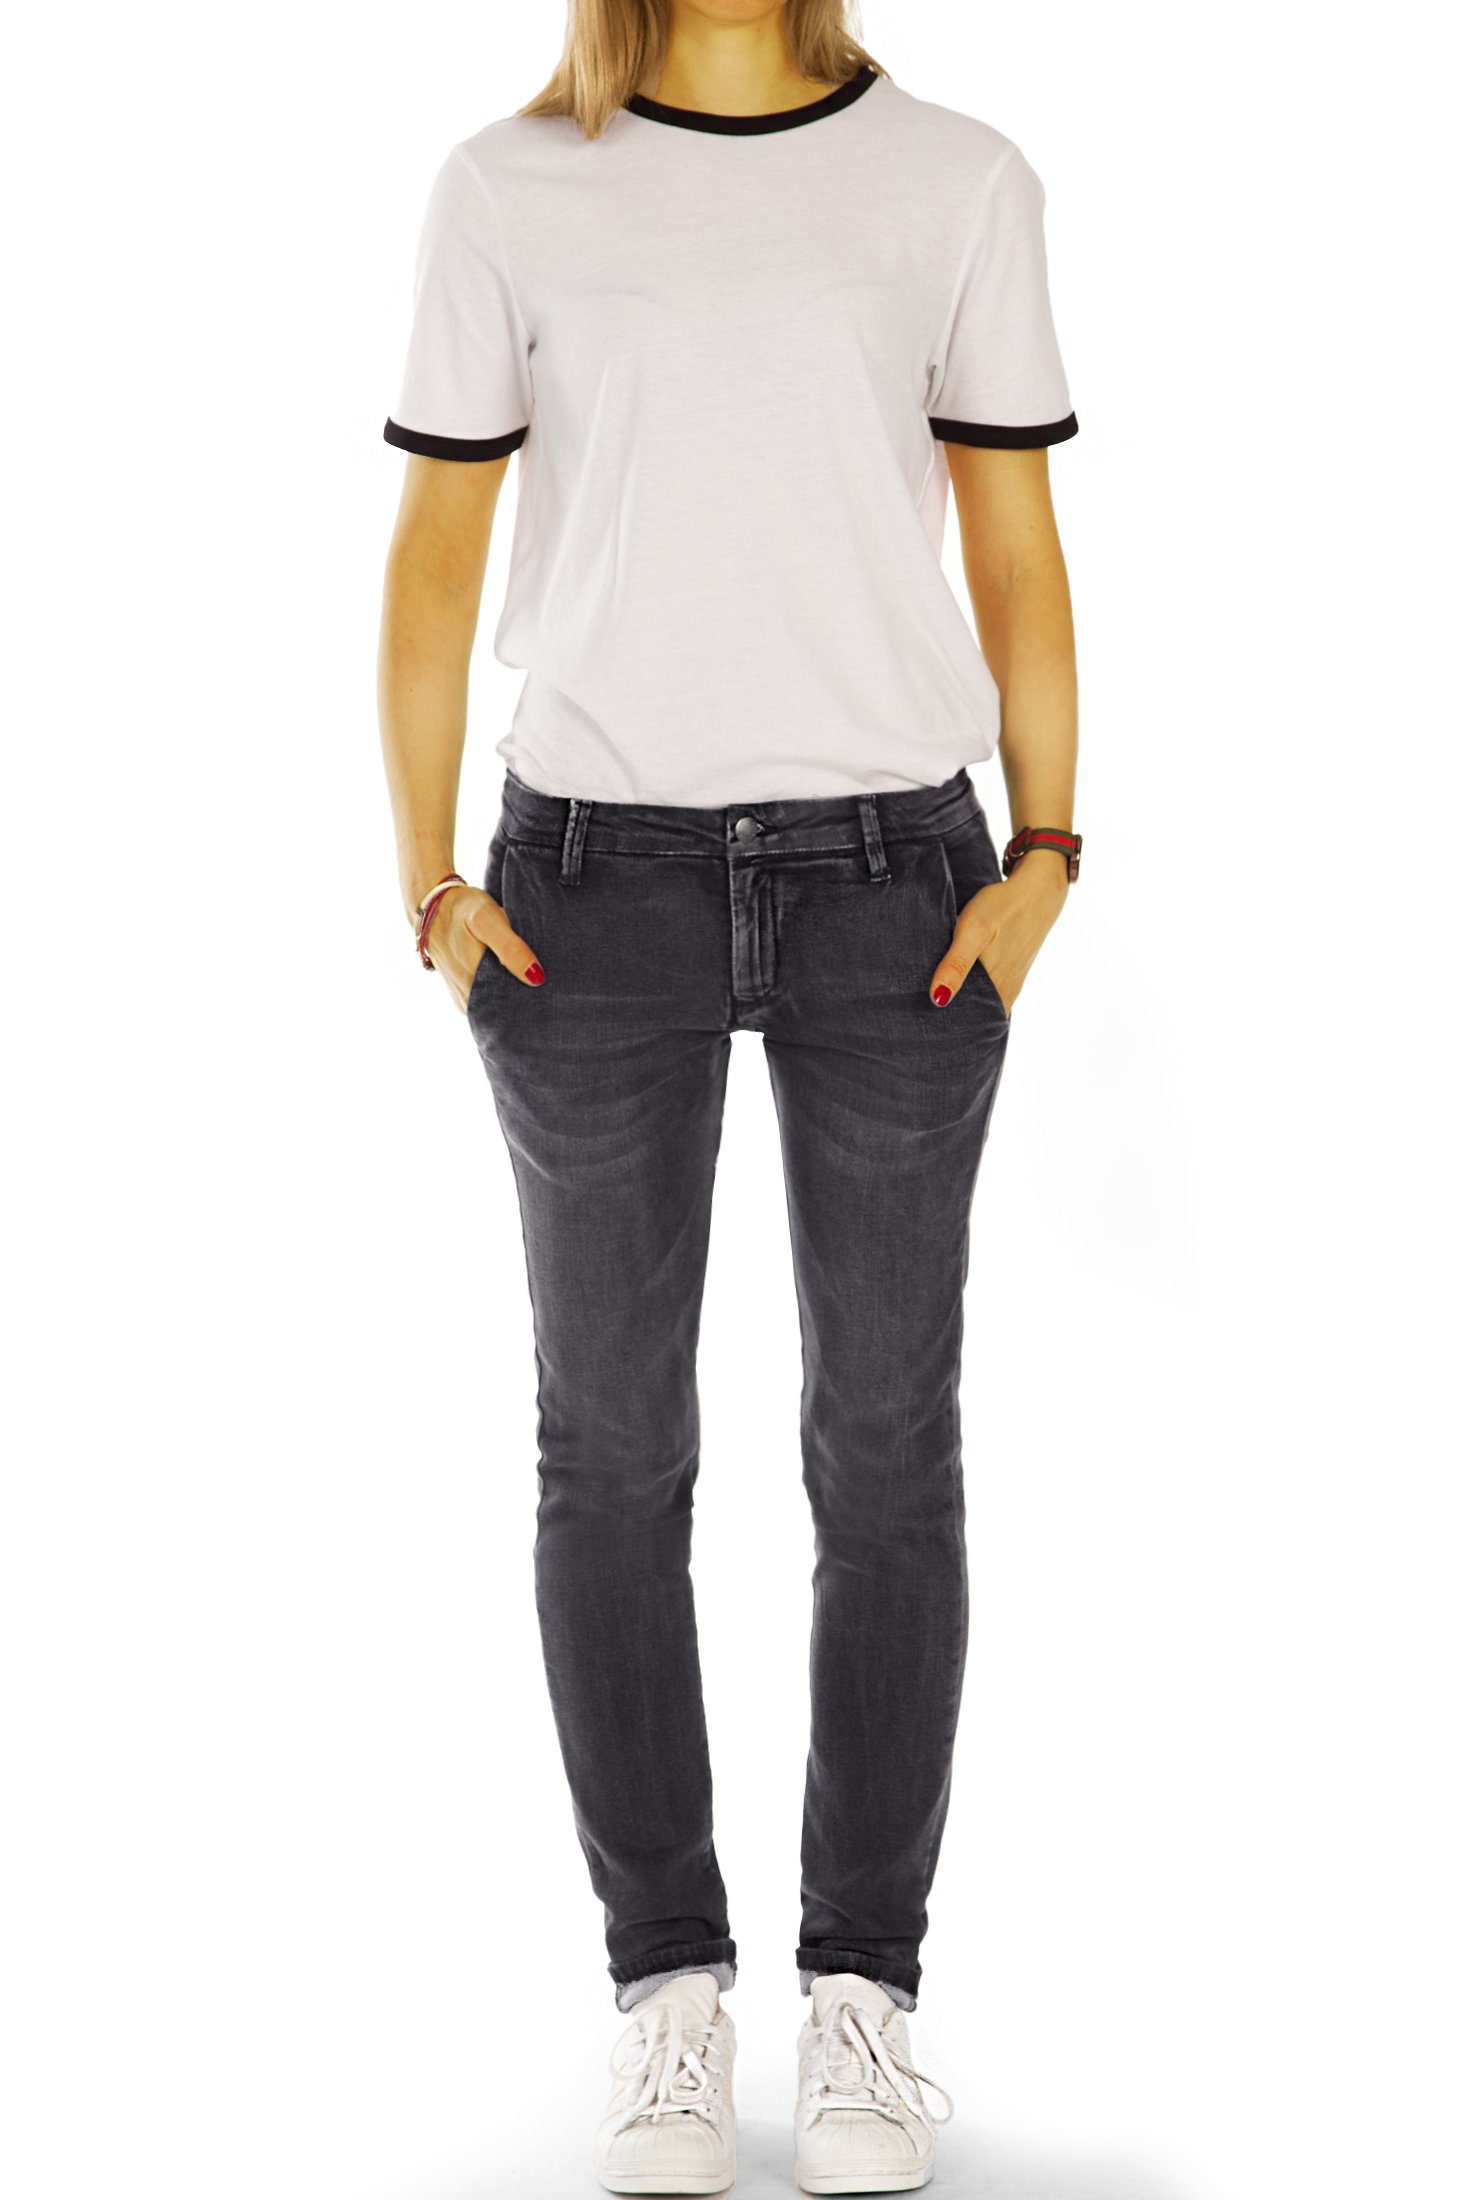 Hüfthosen in Damen Chino grau - Unifarben Stretch, - Hüftige j10m-3 be mit Hose styled Chinohose Stoffhosen